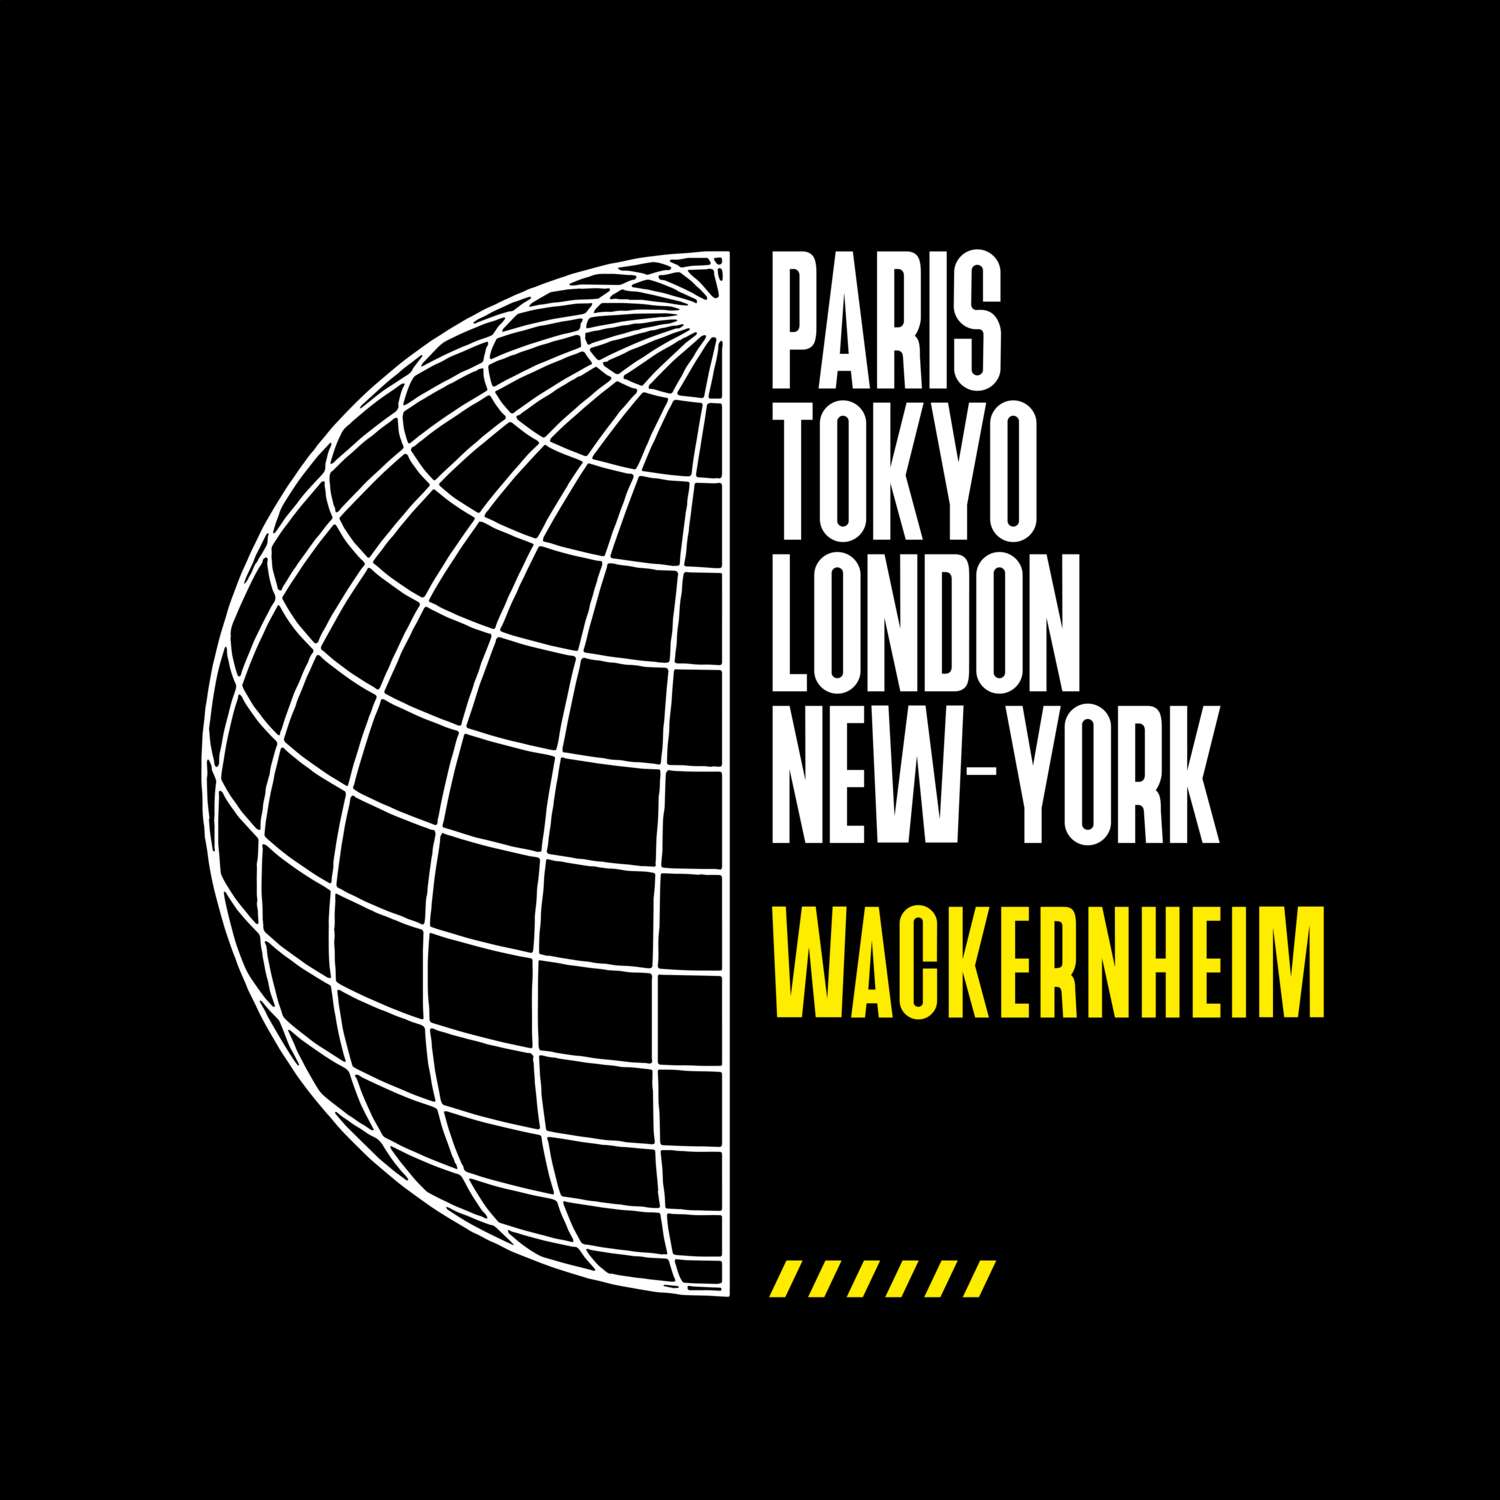 Wackernheim T-Shirt »Paris Tokyo London«